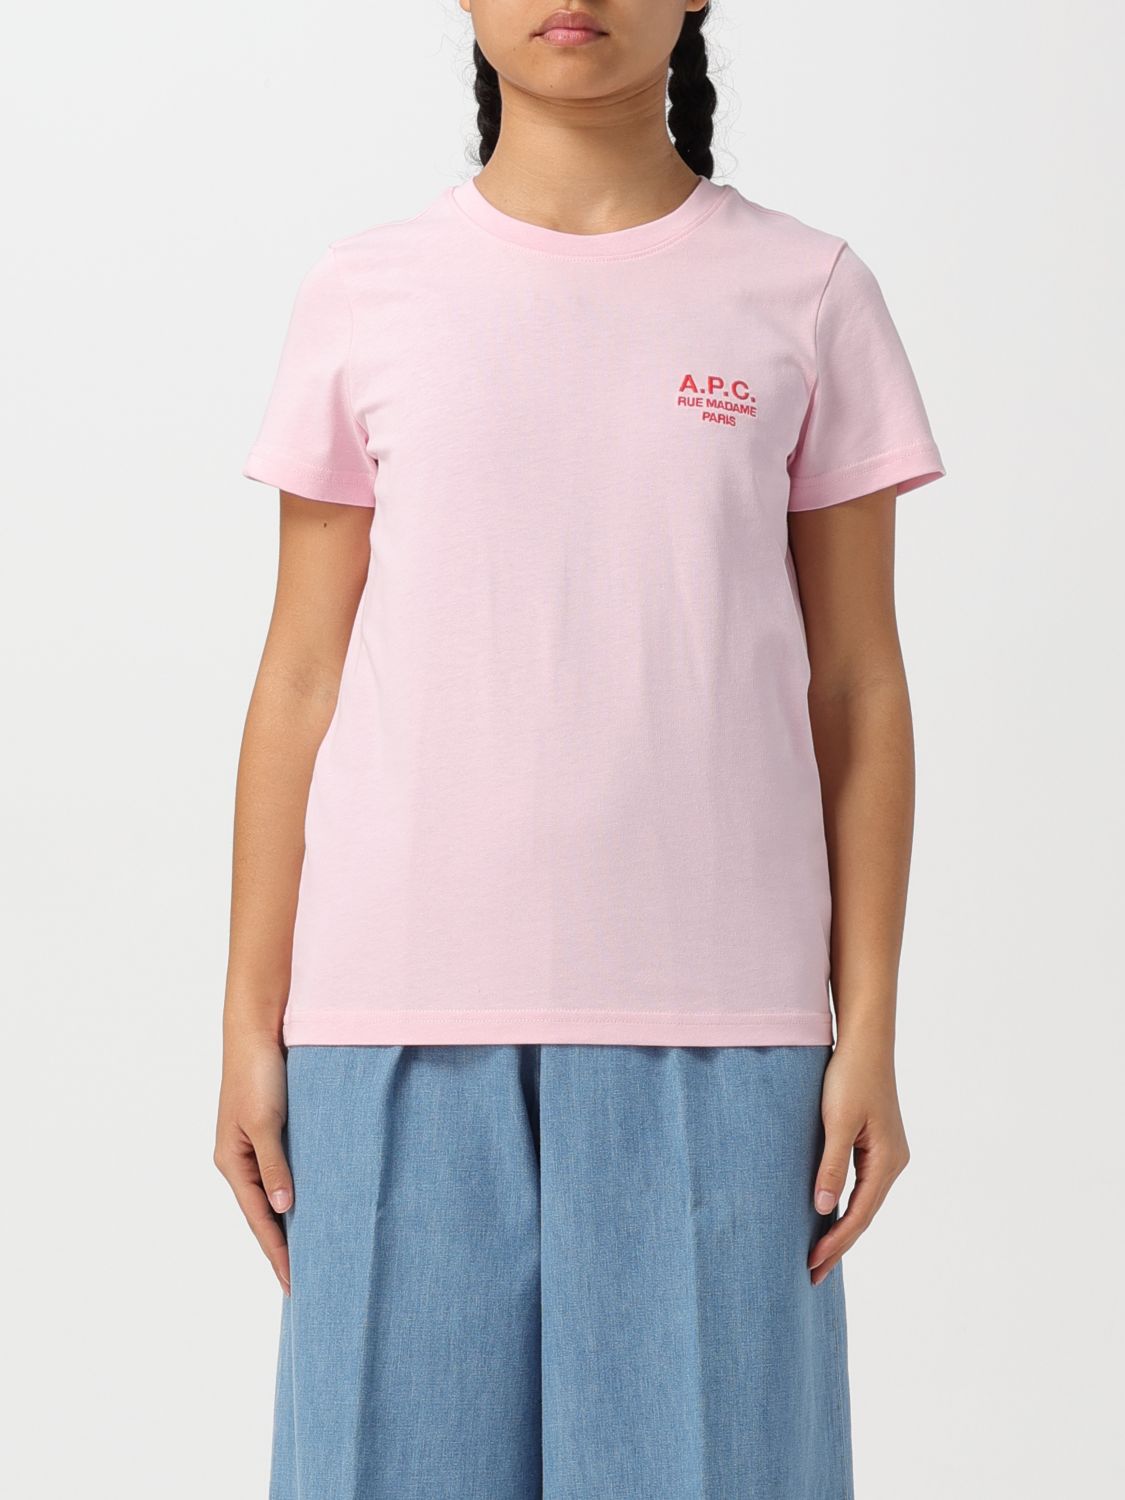 Apc T-shirt A.p.c. Woman Color Pink